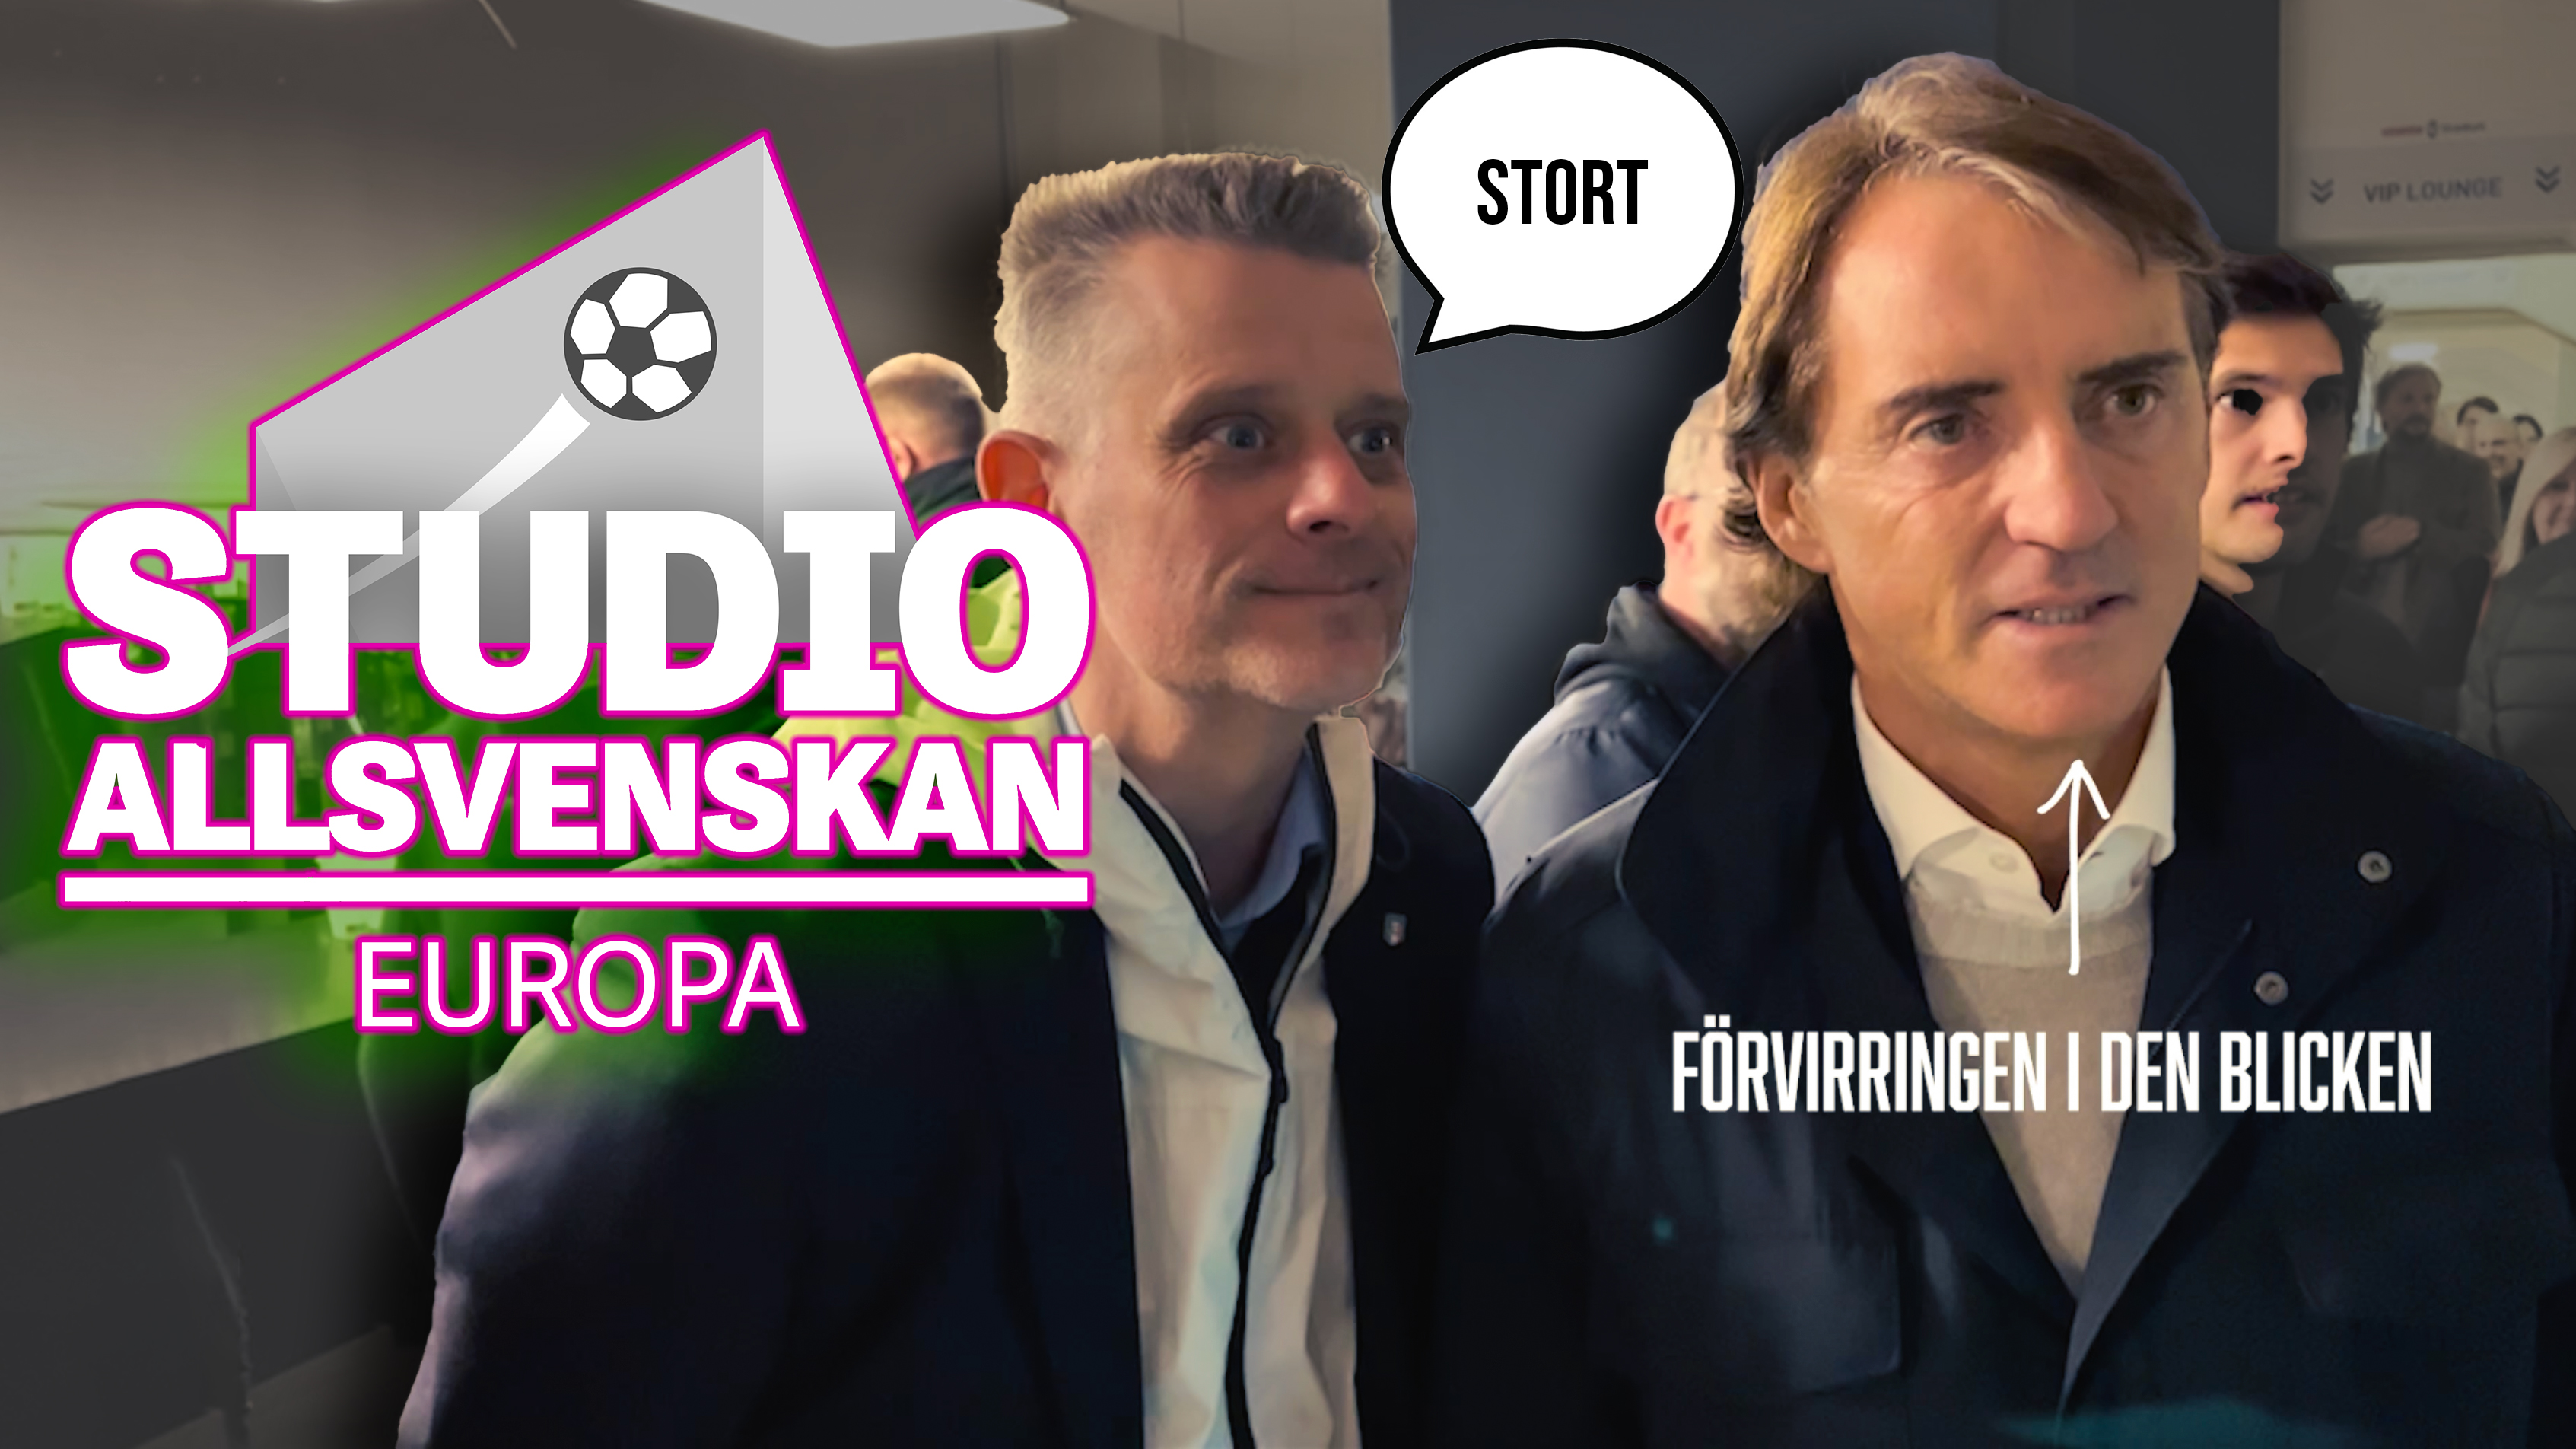 Napoli, Studio Allsvenskan Europa, Studio Allsvenskan, serie a, Roberto Mancini, Marcus Birro, Atalanta